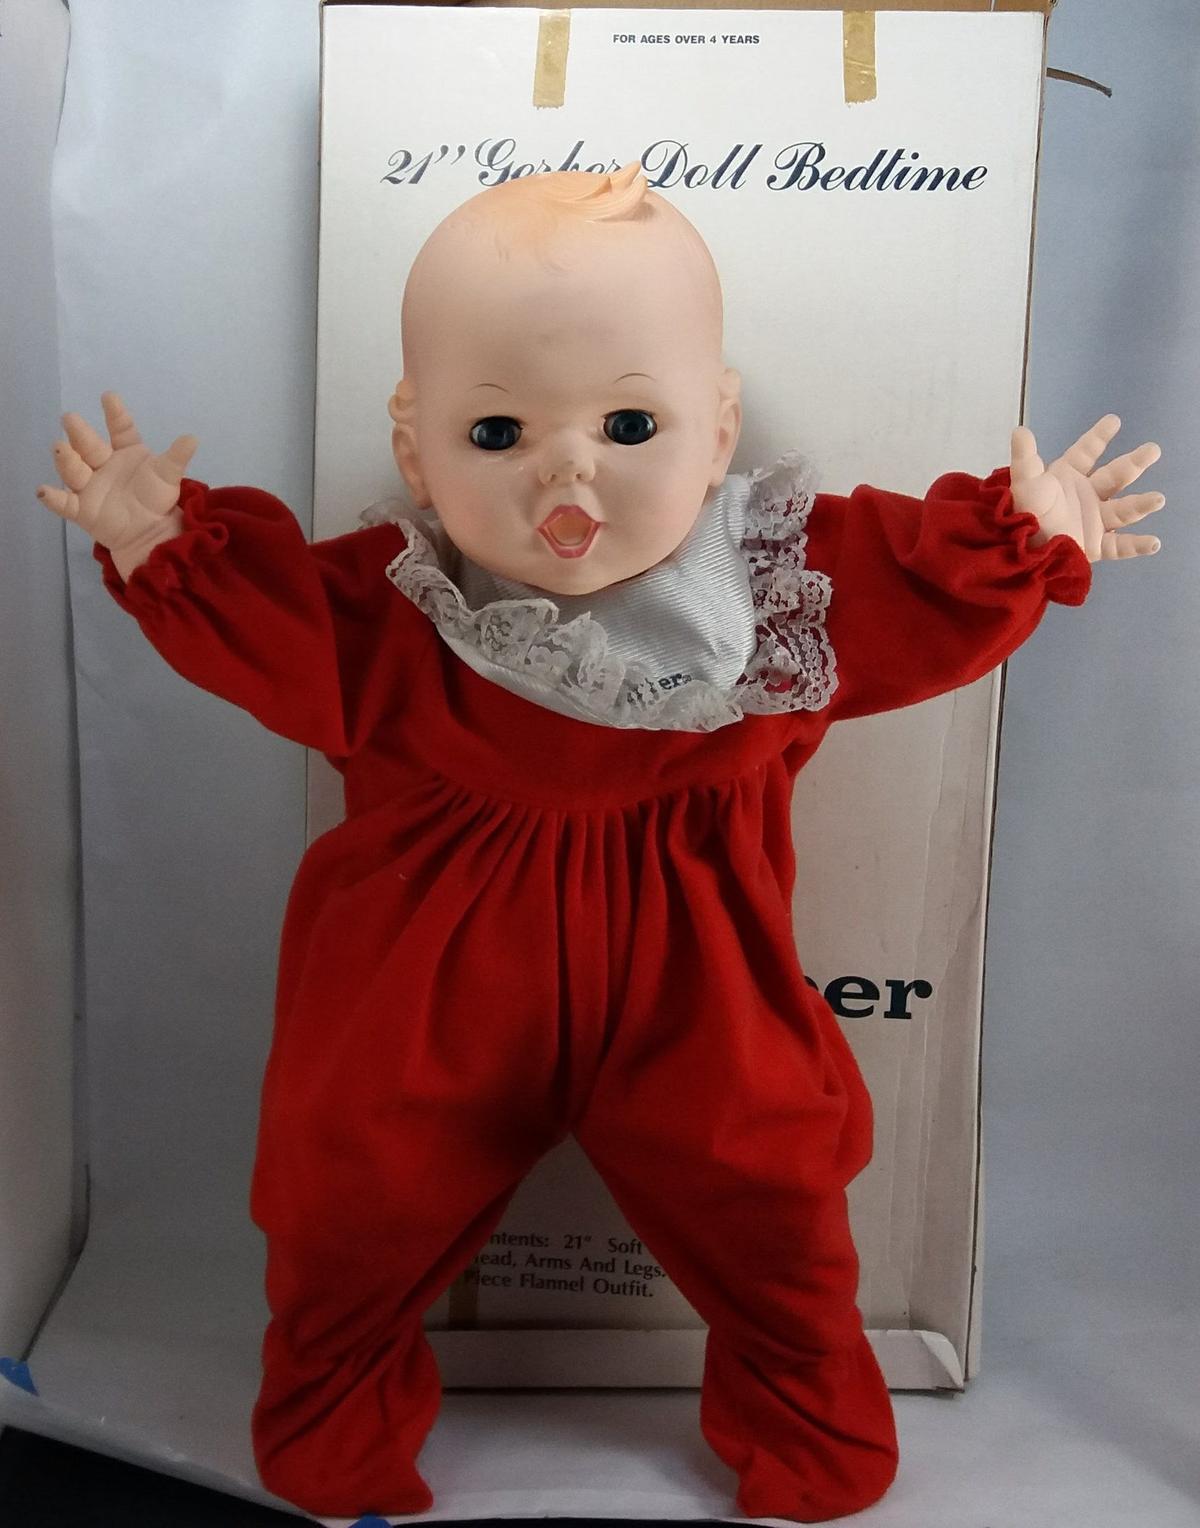 Gerber Bedtime Porcelain Doll